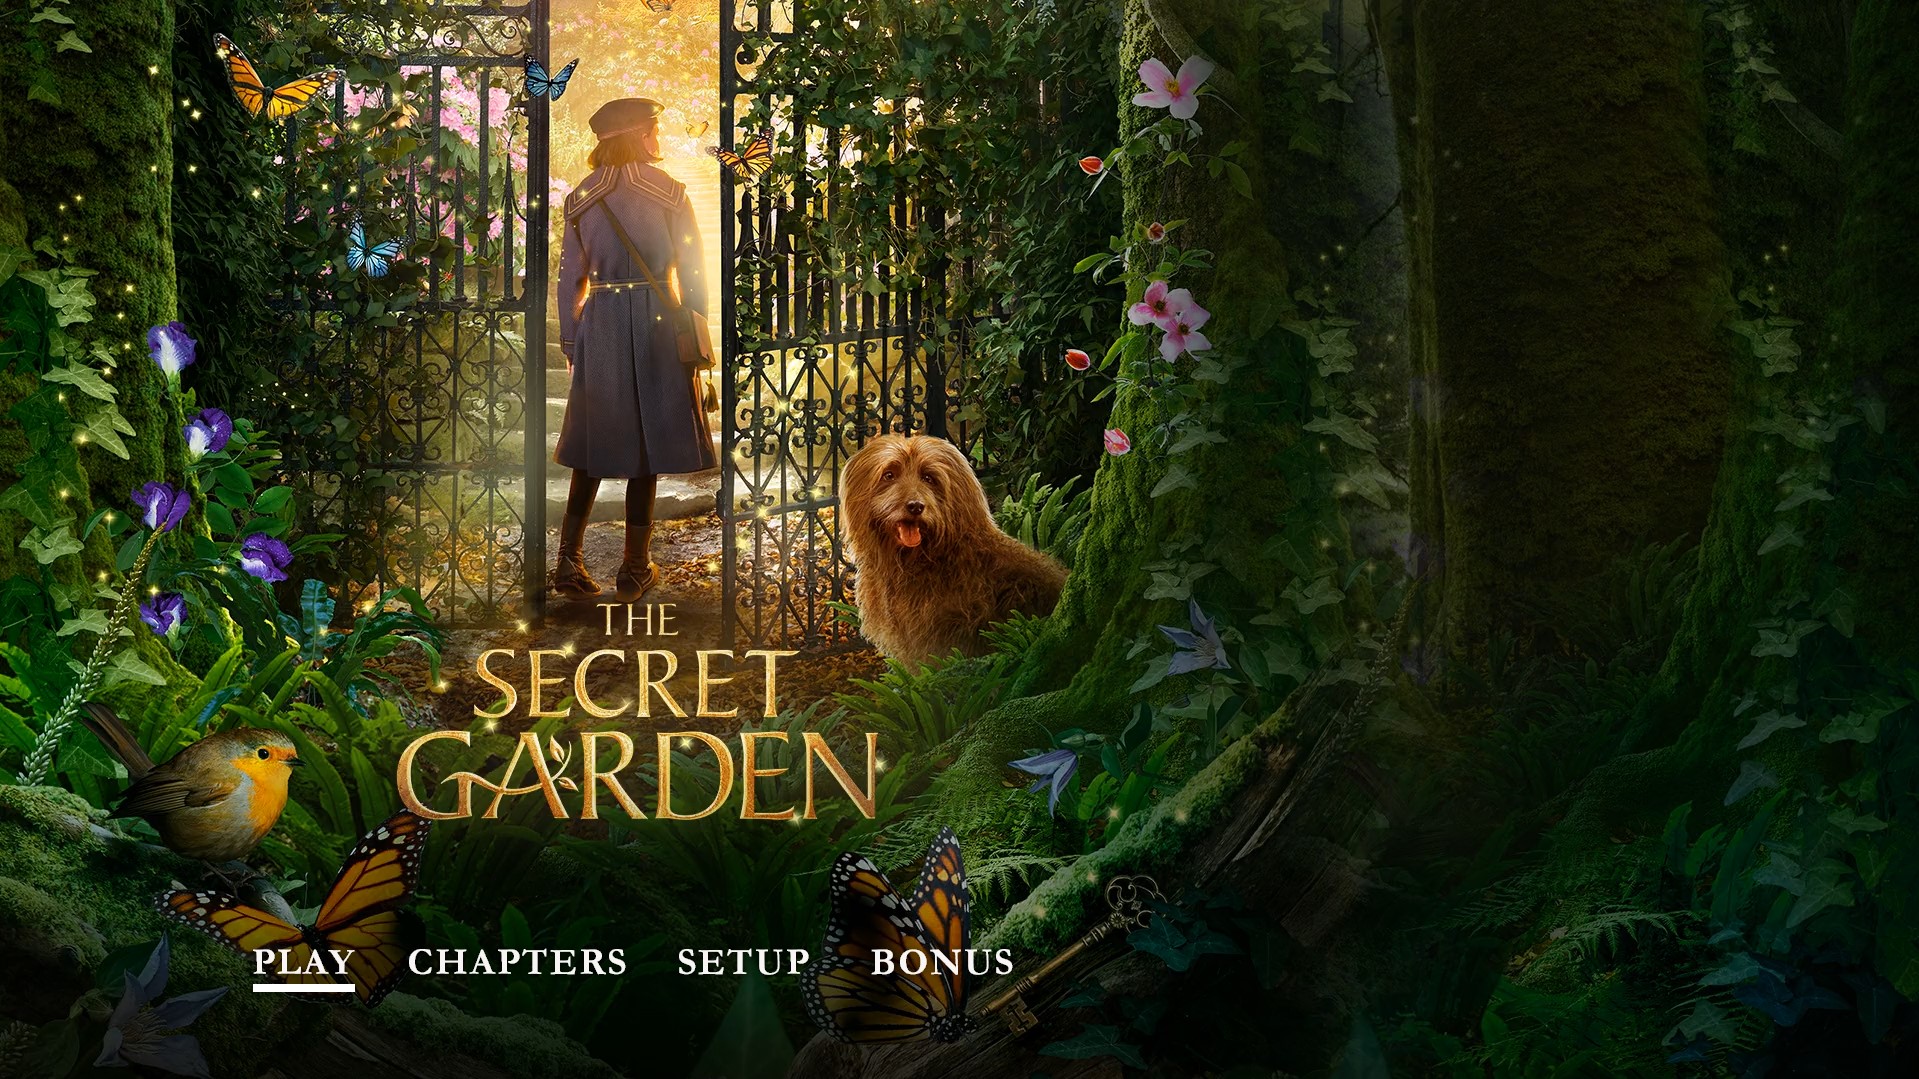 El jardín secreto (2020) 1080p BD50 Latino